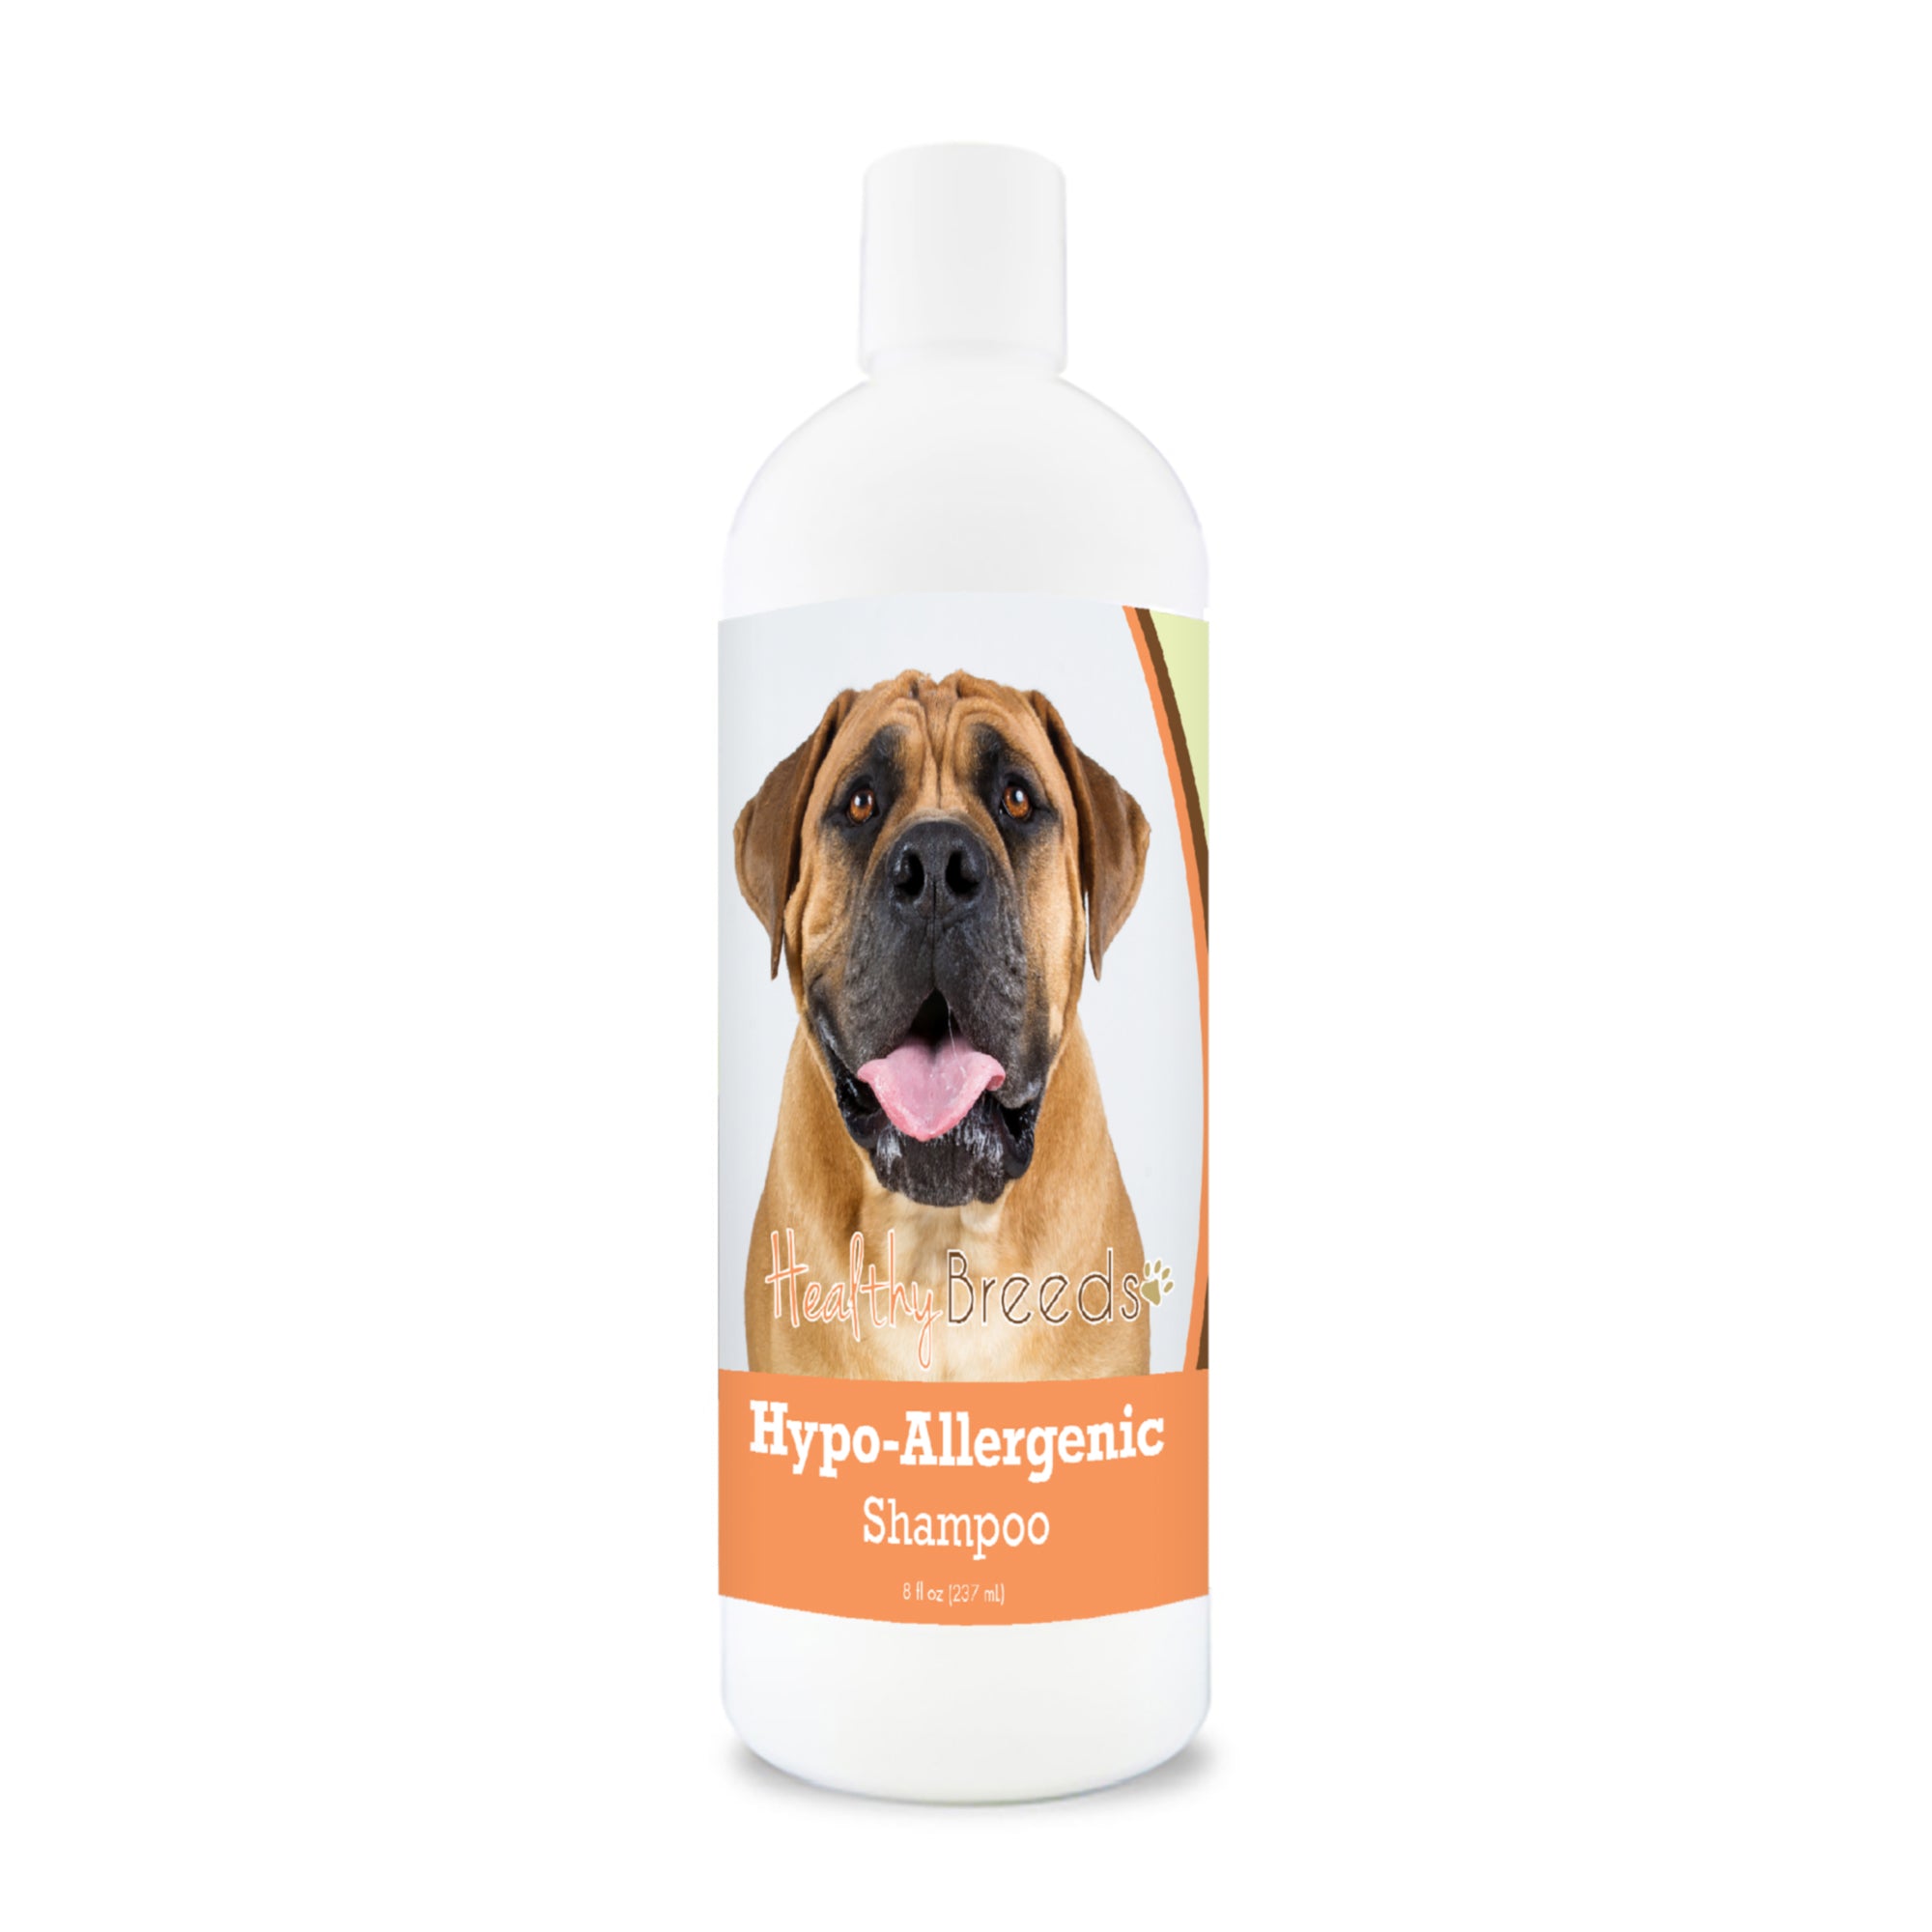 Boerboel Hypo-Allergenic Shampoo 8 oz